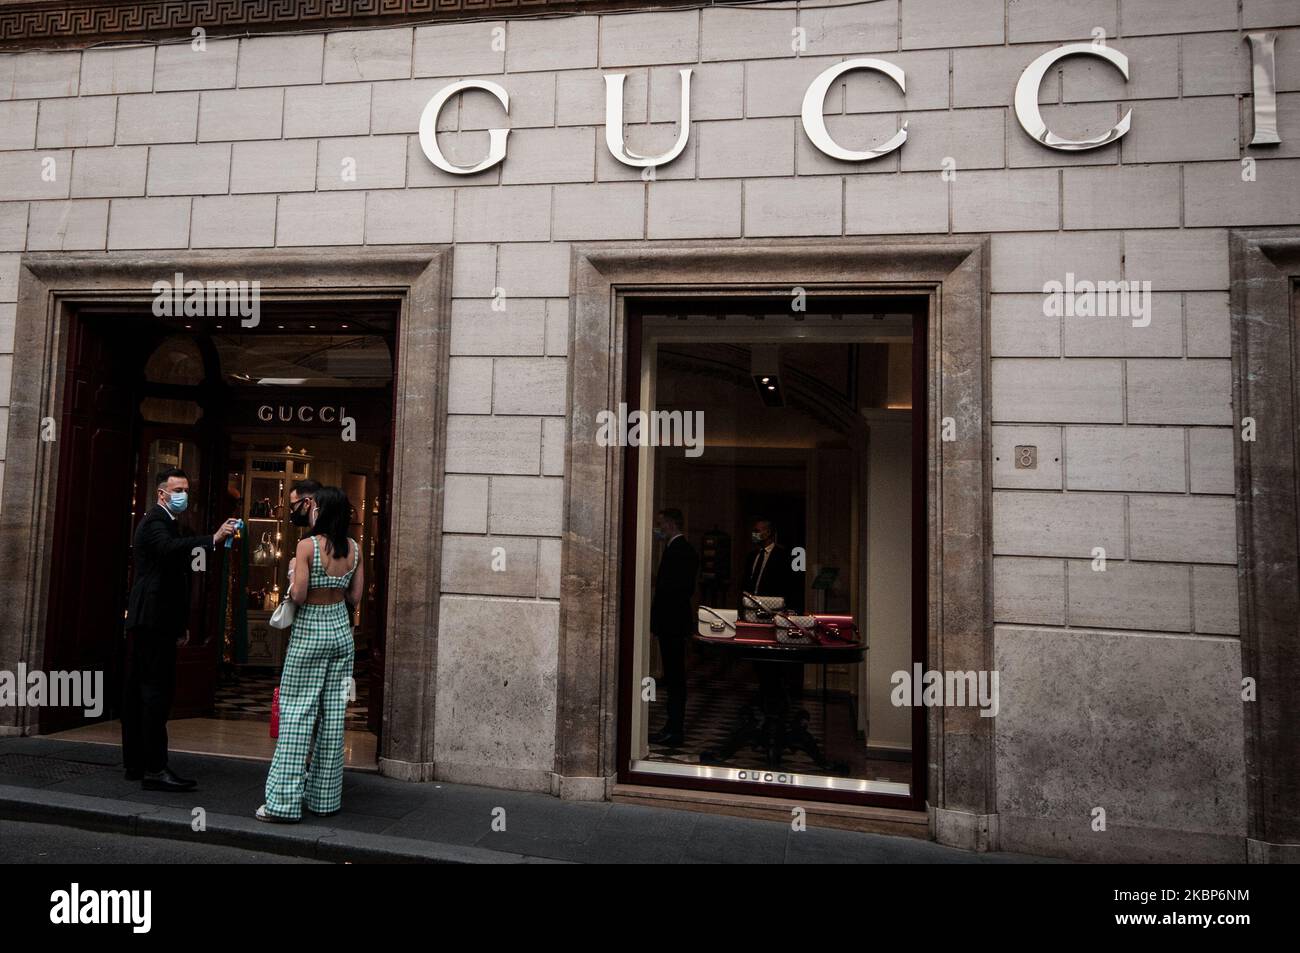 GUCCI - 51 Photos & 30 Reviews - Via Condotti 6, Roma, Italy - Men's  Clothing - Phone Number - Yelp